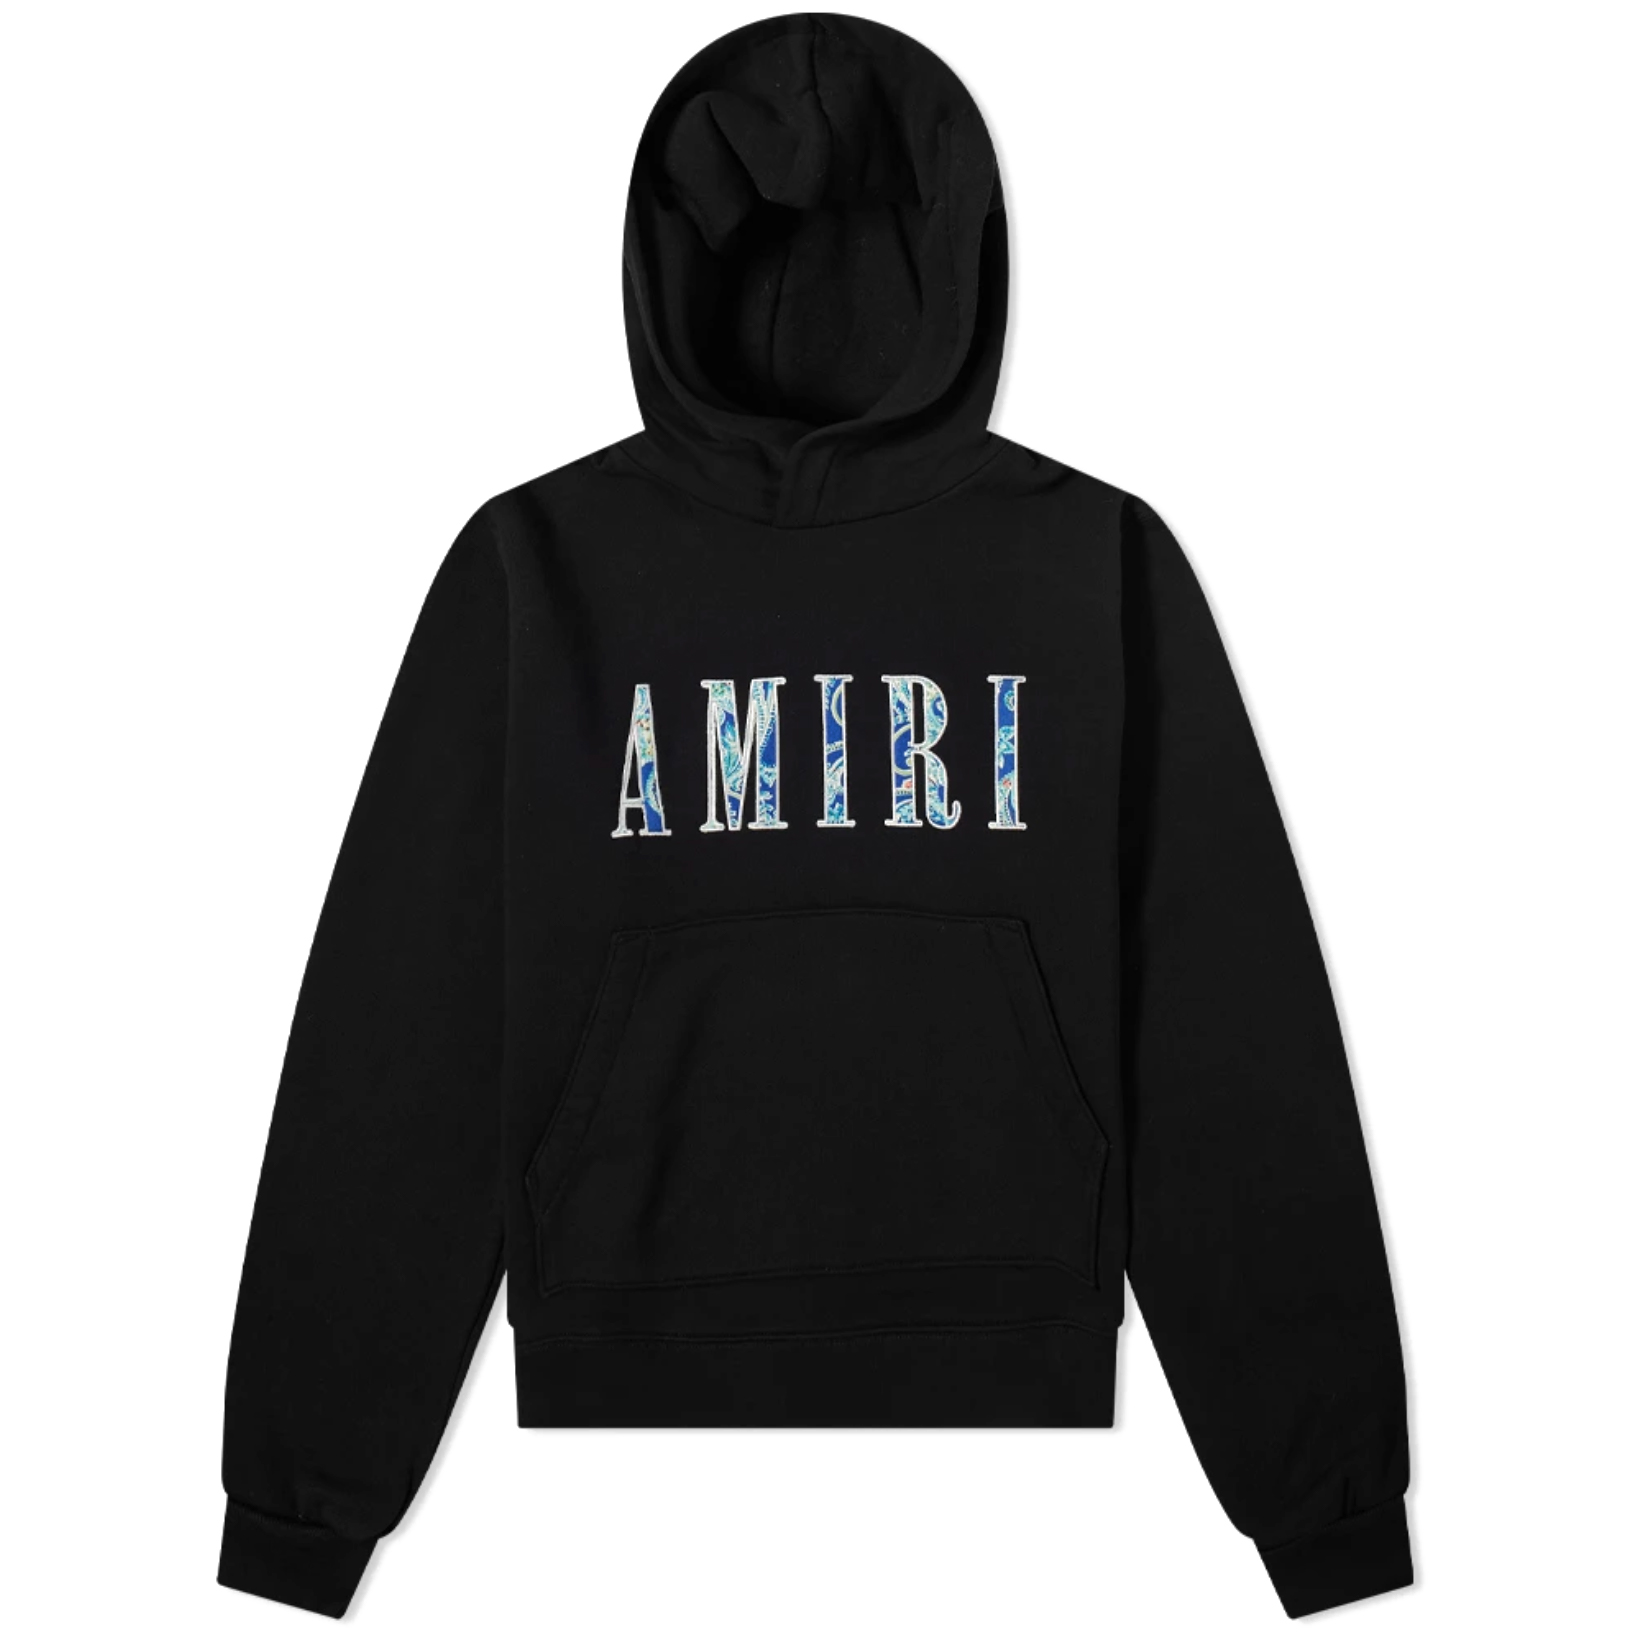 Buy & Sell Other Brands AMIRI Streetwear Apparel